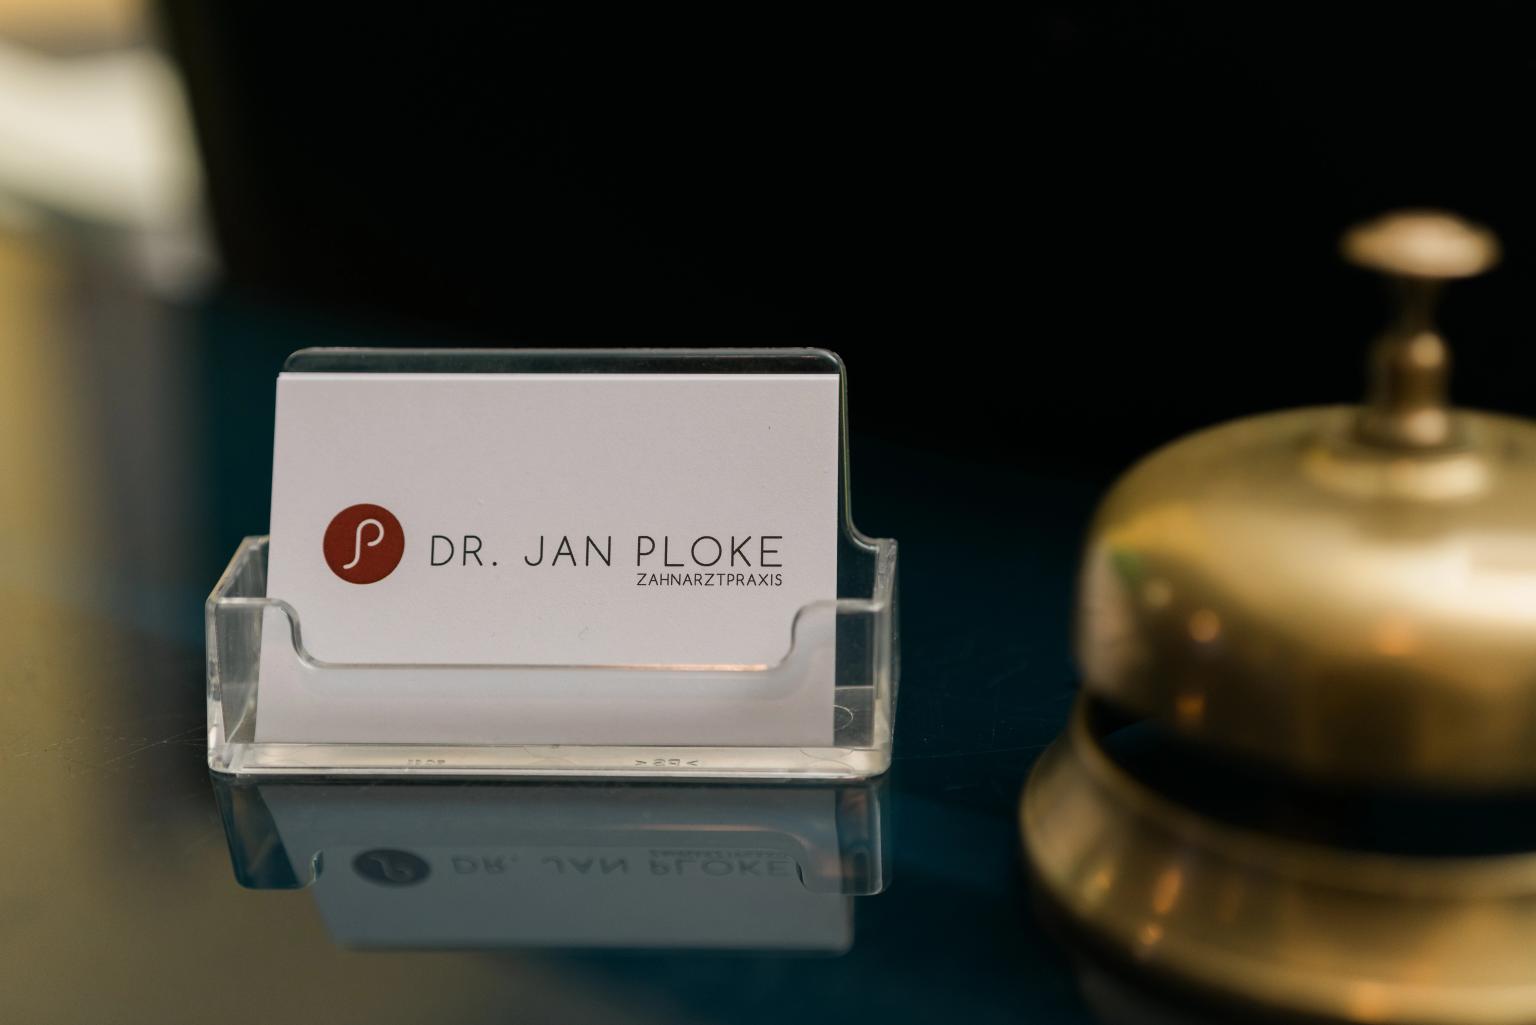 Zahnarztpraxis Dr. Jan Ploke: Visitenkarte mit Logo und Kontaktdaten